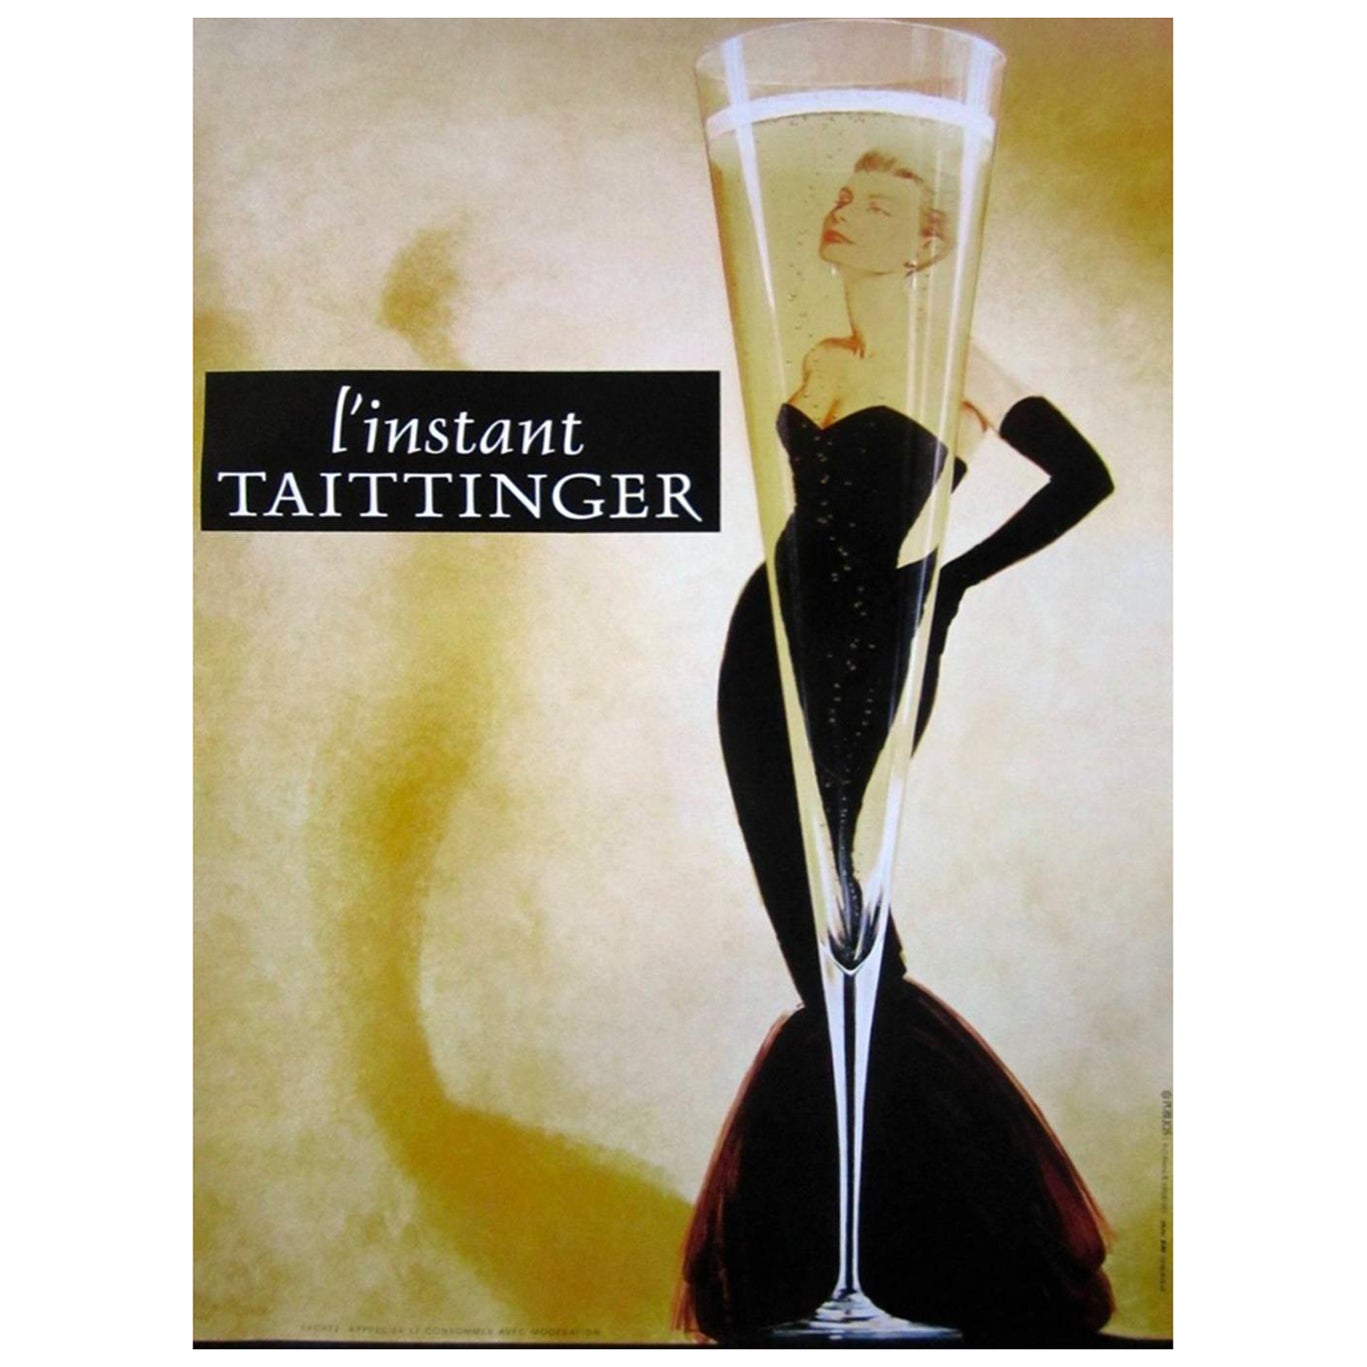 1988 Champagne Taittinger Original Vintage Poster